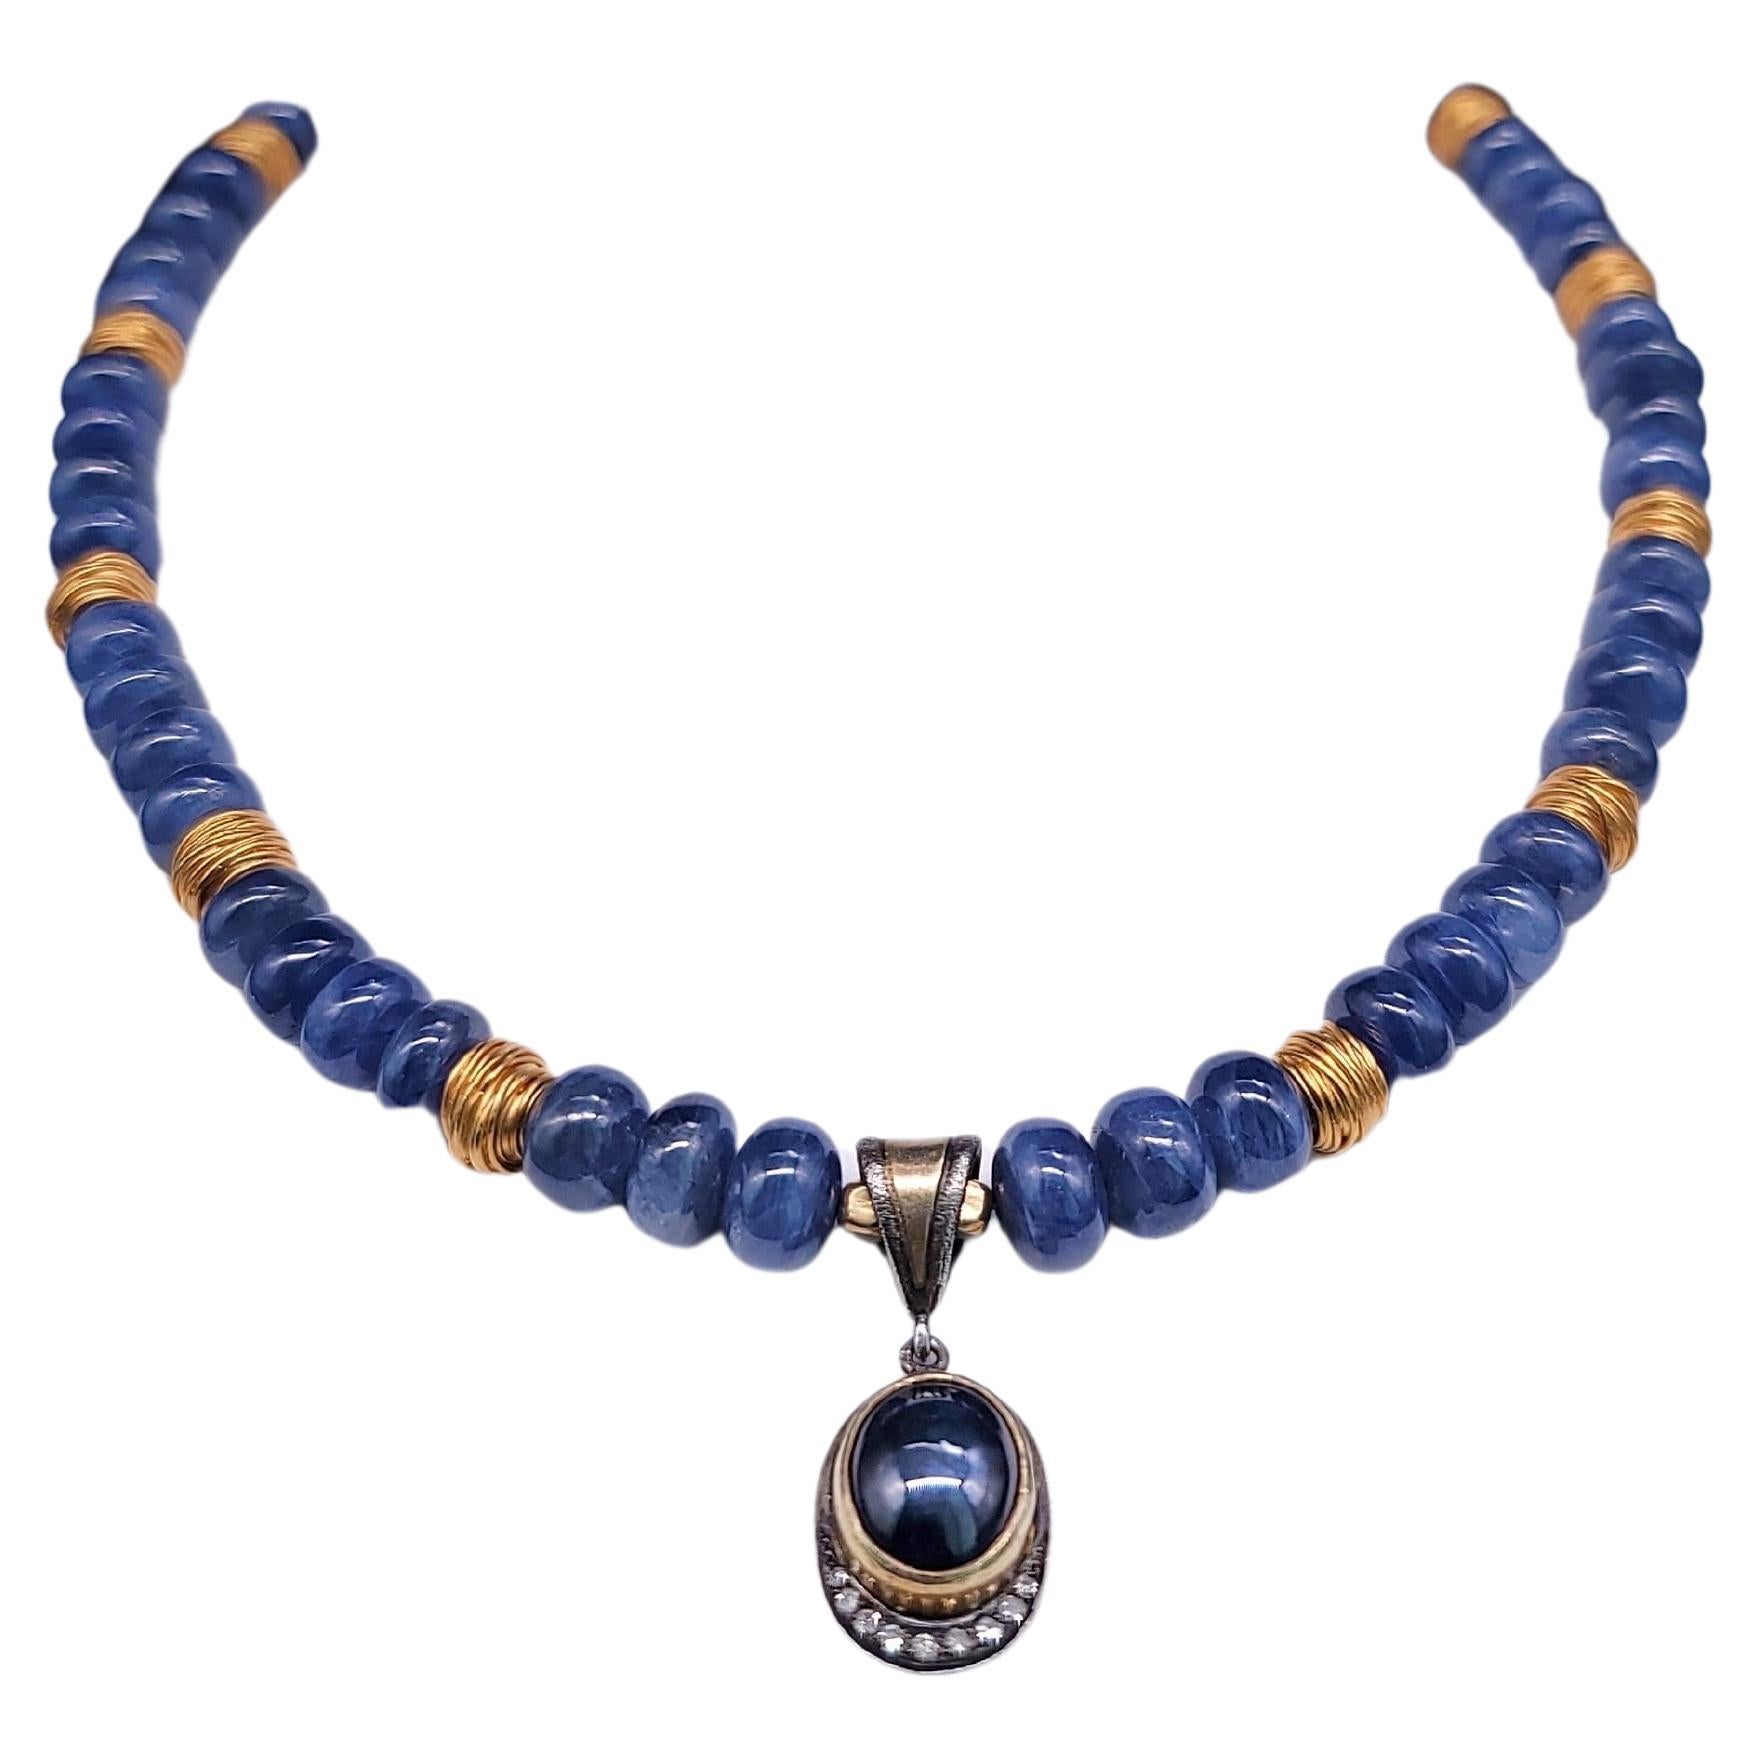 A.Jeschel Royal Blue Sapphire Necklace.